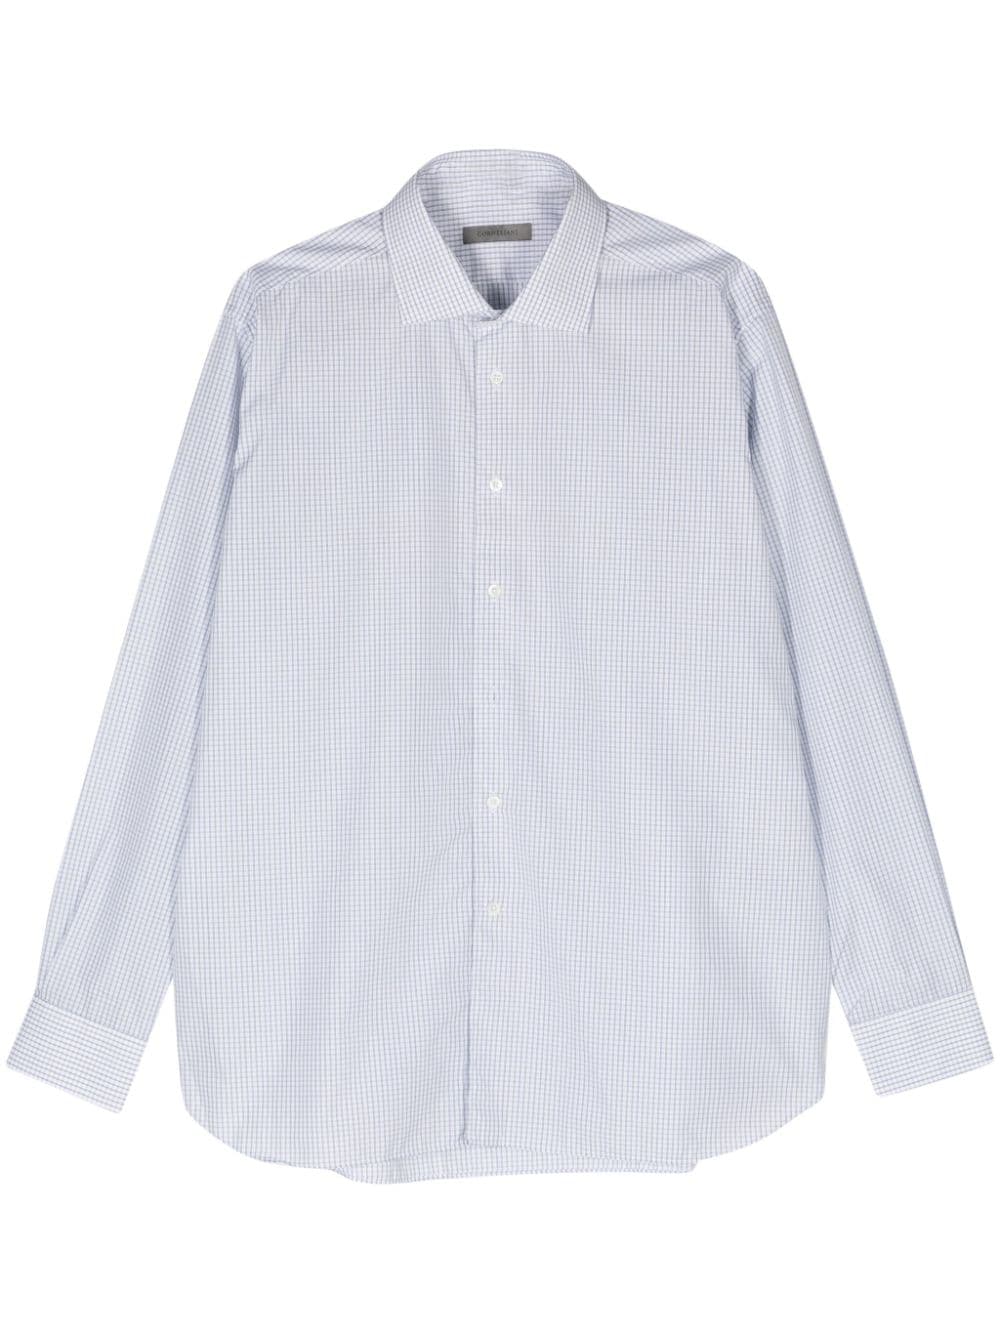 Corneliani Checked Cotton Shirt In White